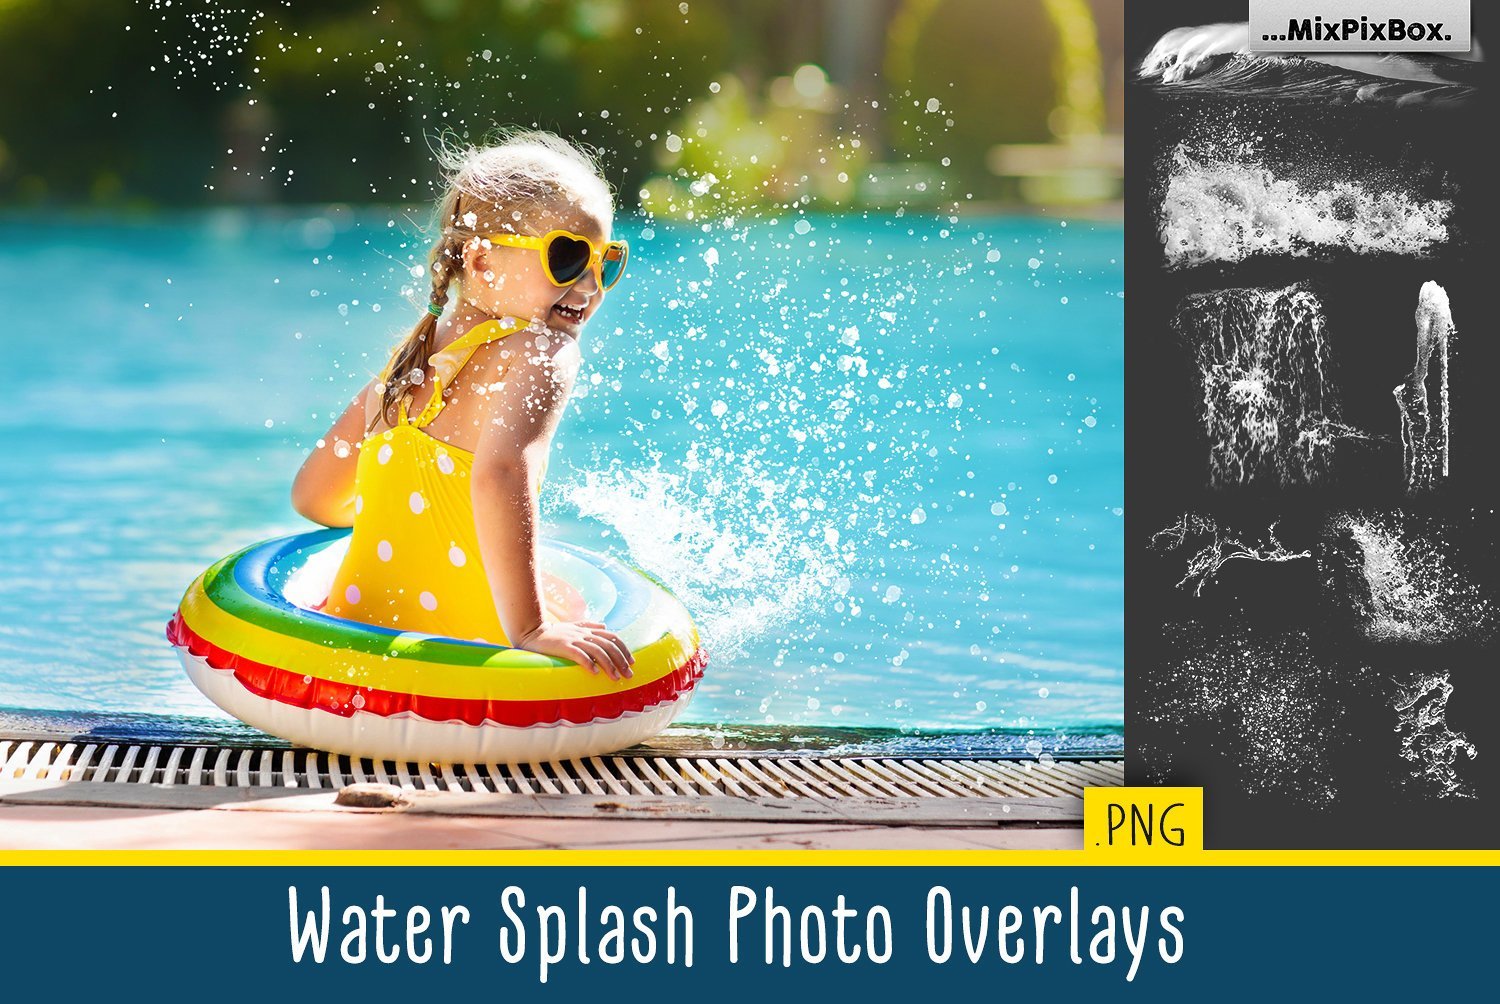 Water Splash Photo Overlayscover image.